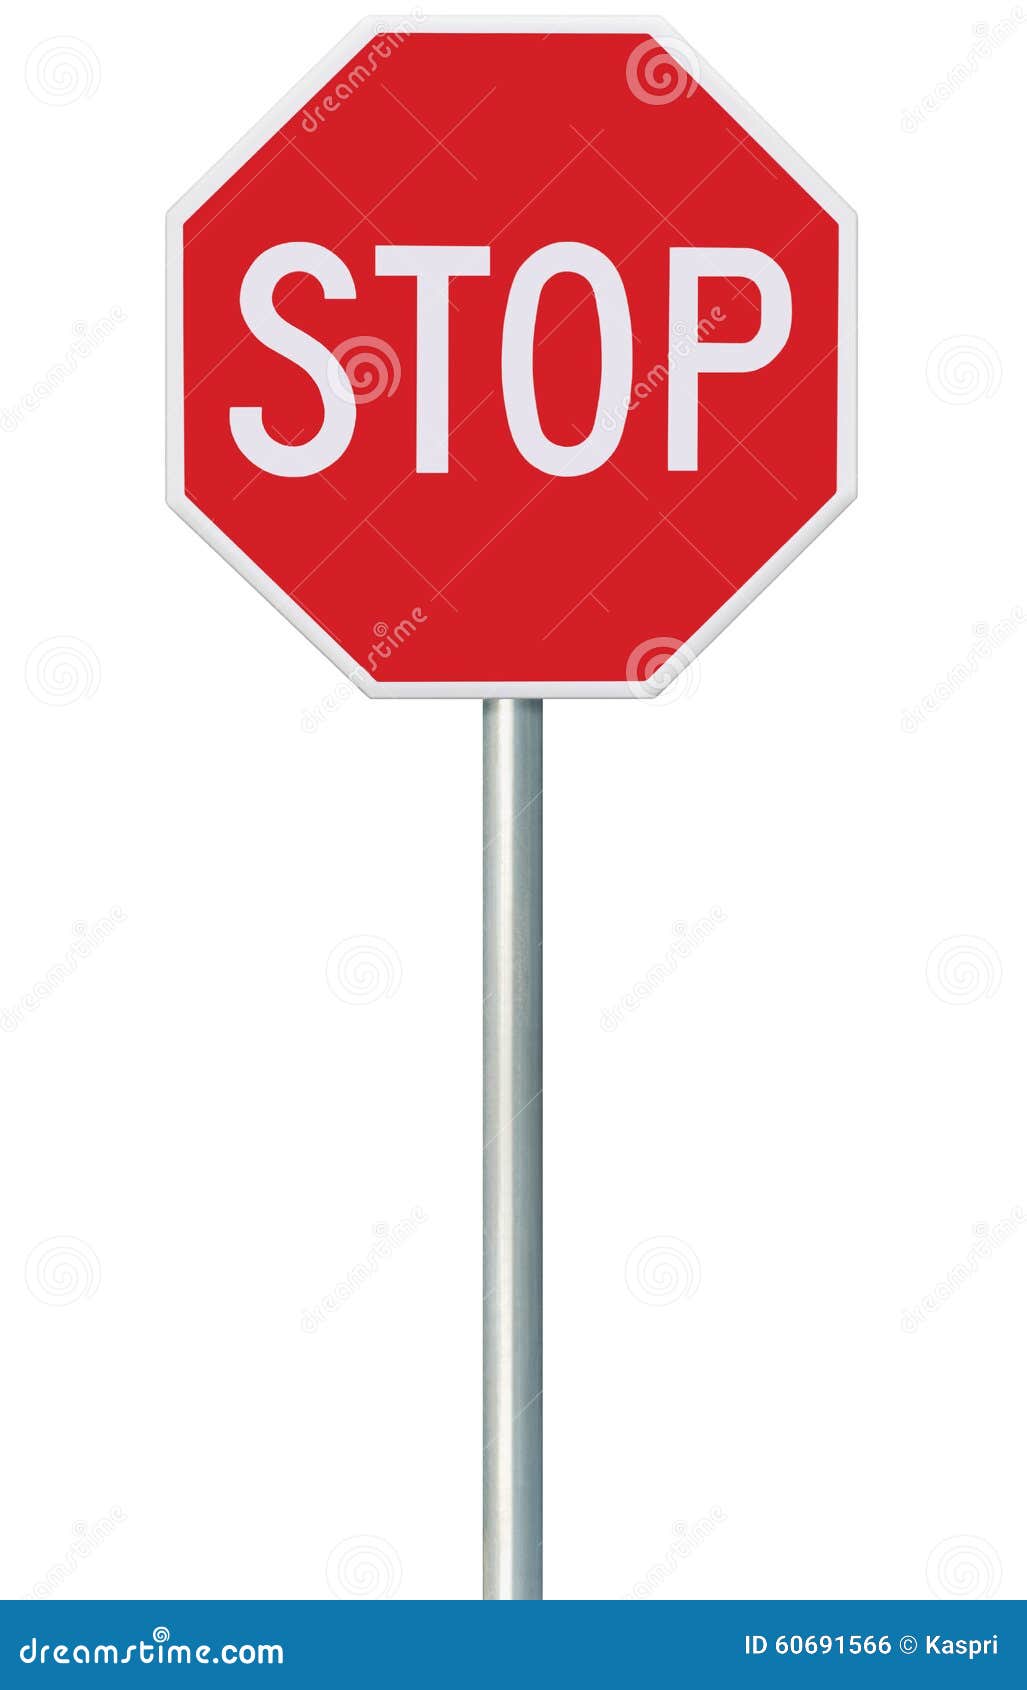 red stop sign,  traffic regulatory warning signage octagon, white octagonal frame, metallic post, large detailed vertical